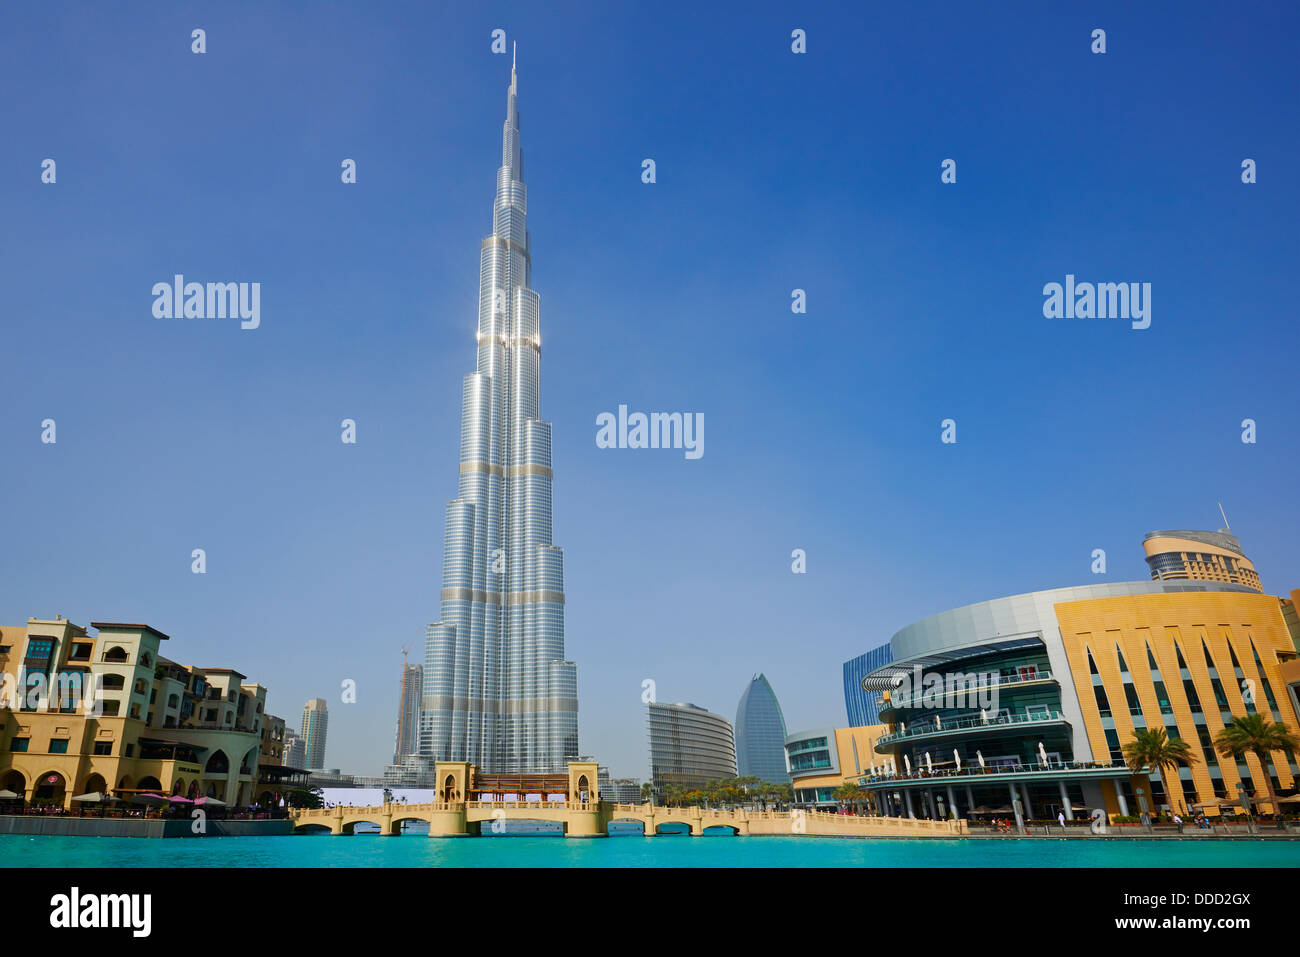 Emirats Arabes Unis, Dubai, la tour Burj Khalifa haute de 828m // United Arab Emirates, Dubai, Burj Khalifa tower, 828m high Stock Photo